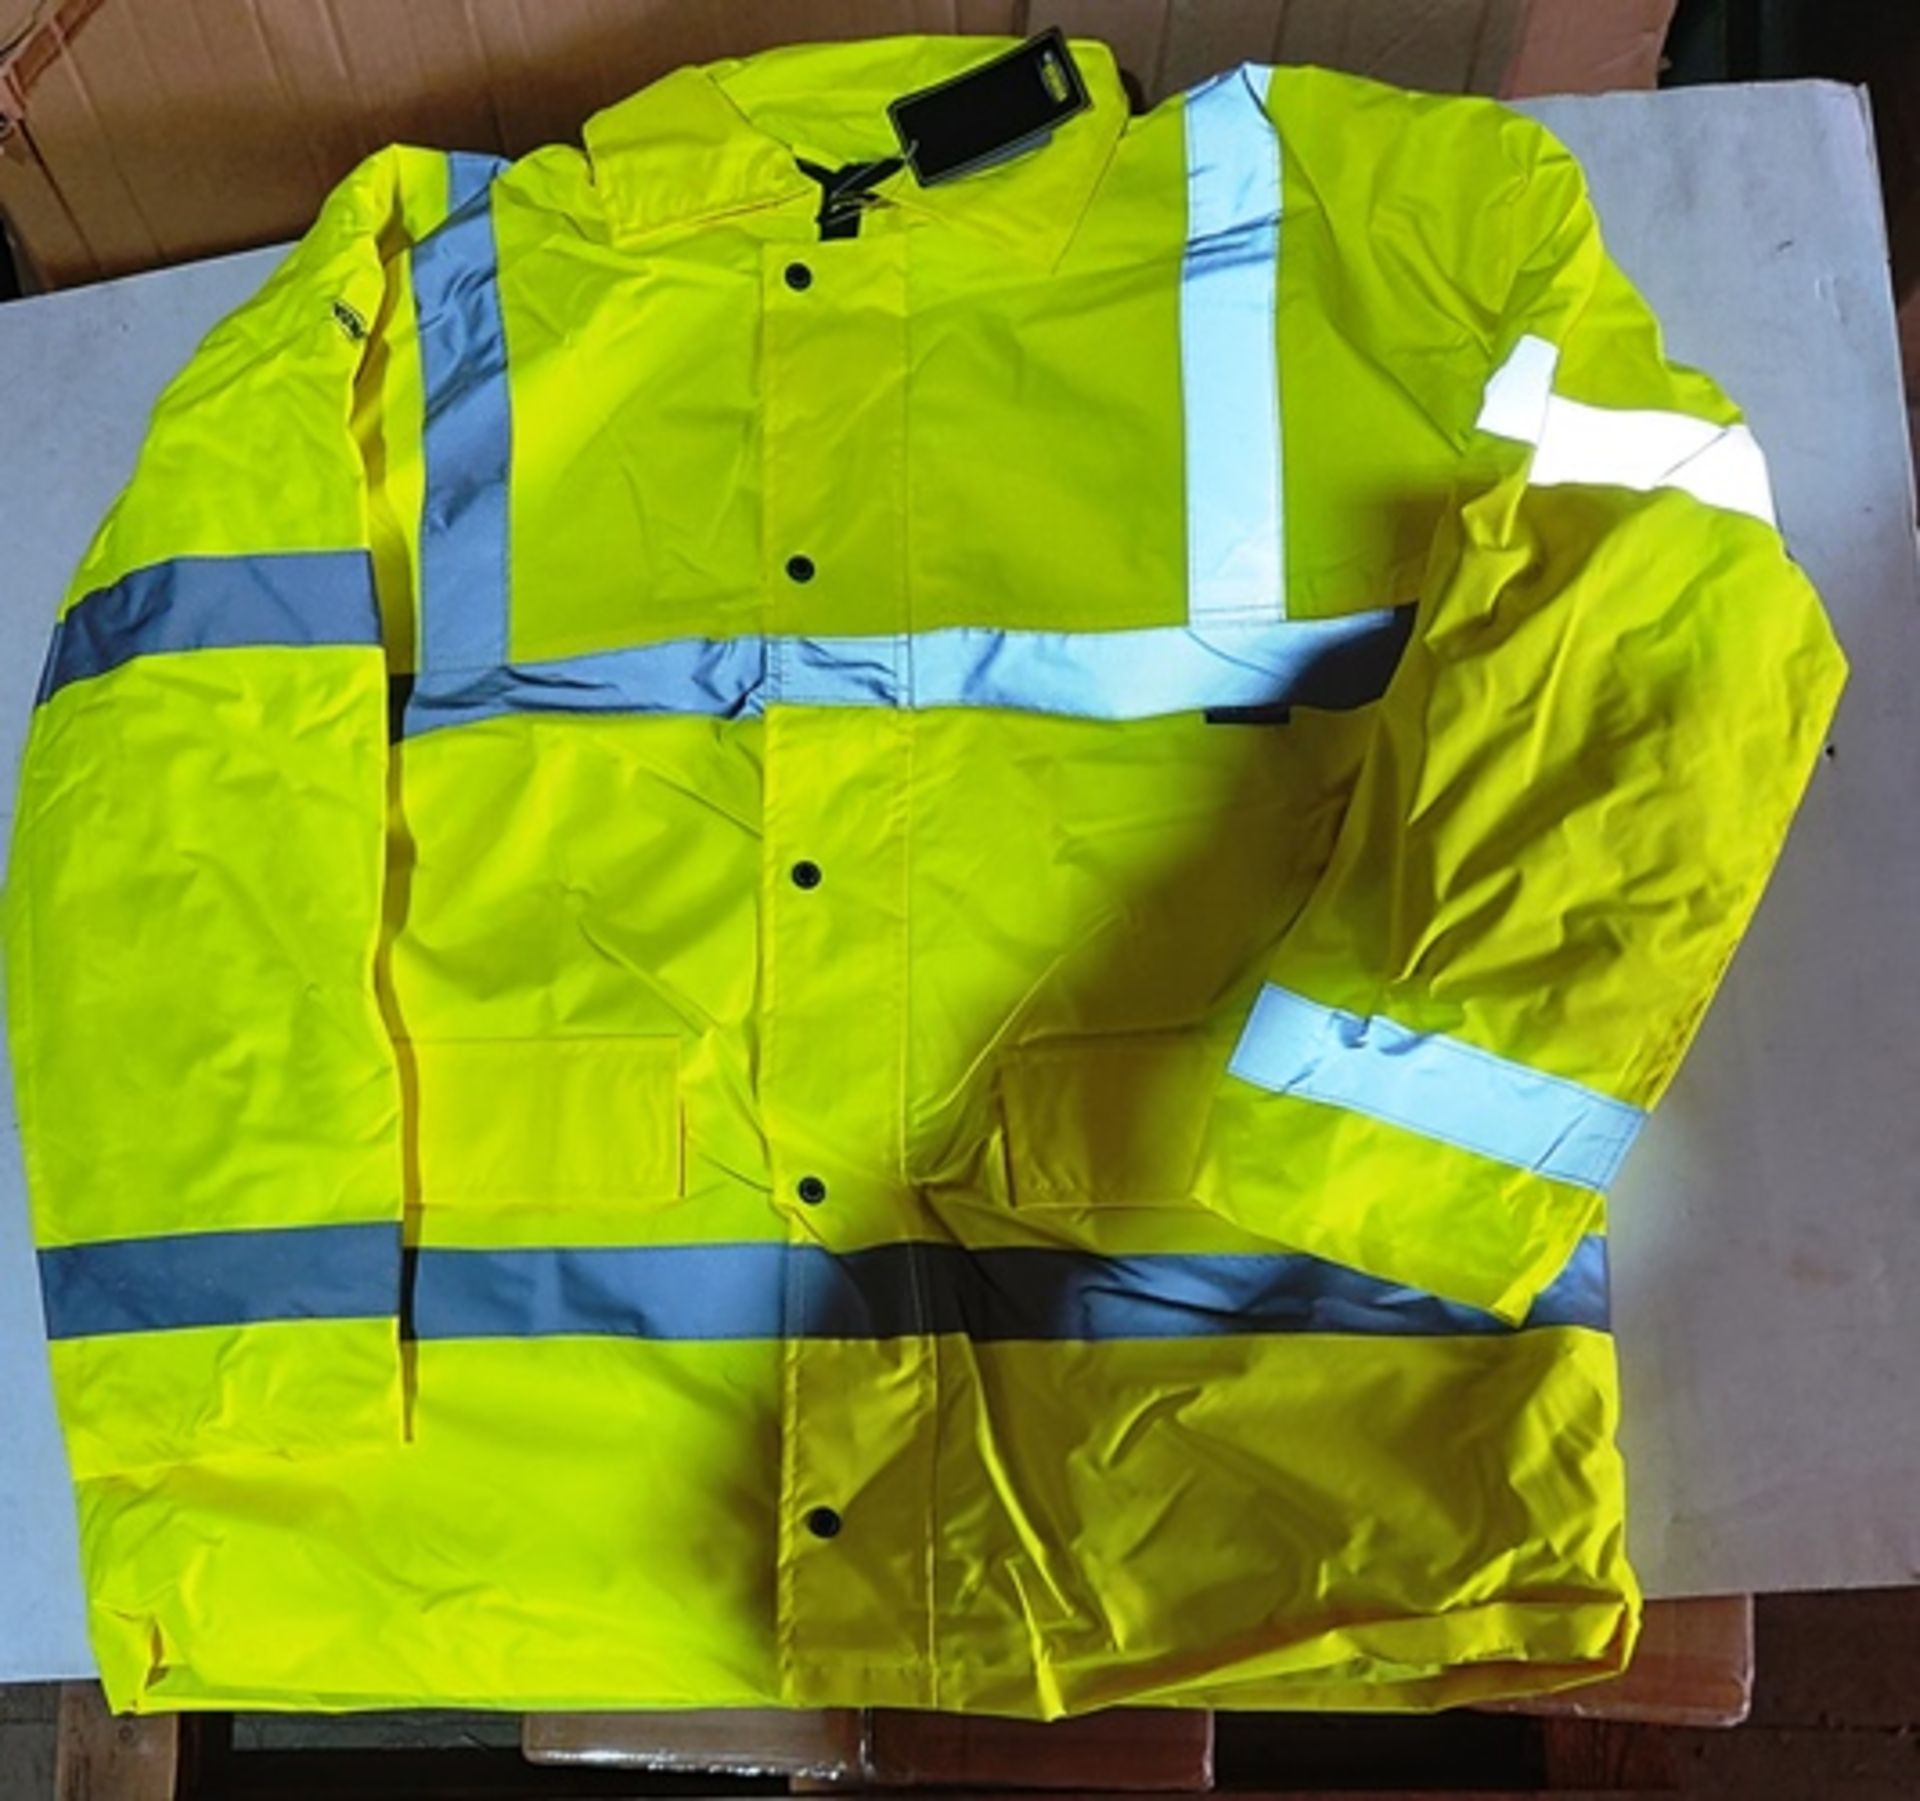 10 x Vizwear Hi Viz yellow Parka jackets in size XXXL (3XL) new in original packaging